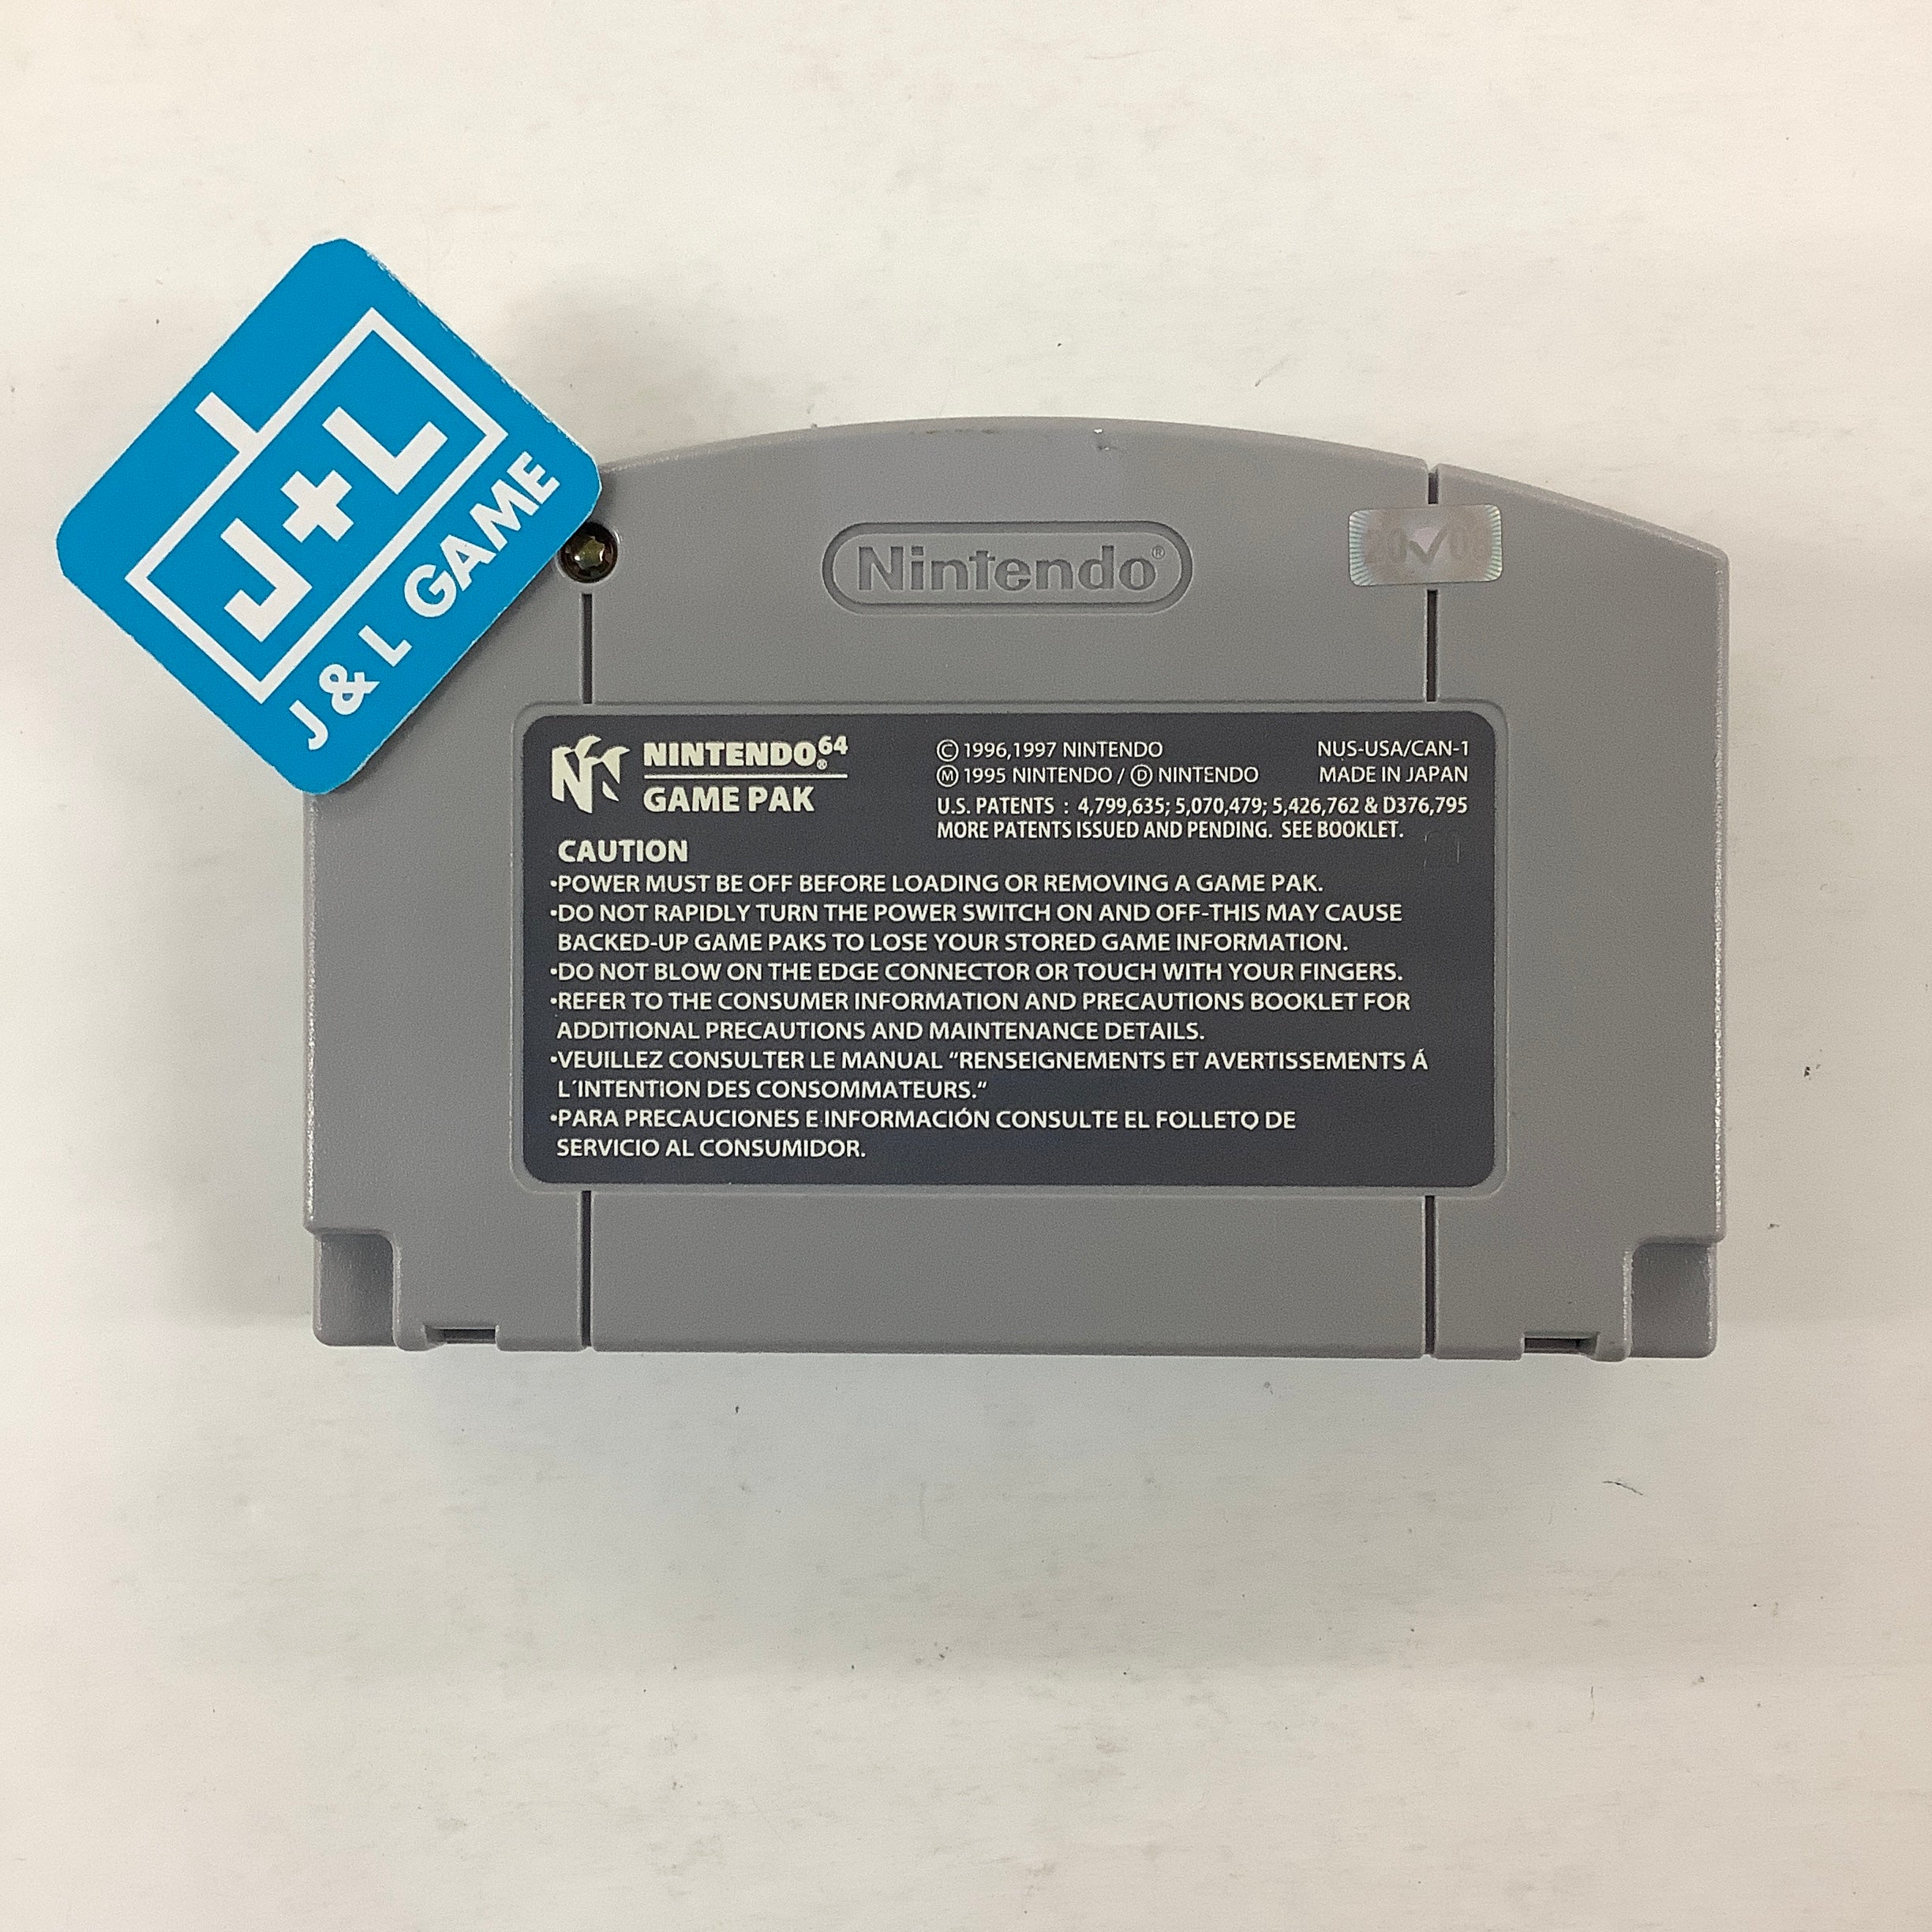 Mission: Impossible - (N64) Nintendo 64 [Pre-Owned] Video Games Ocean   